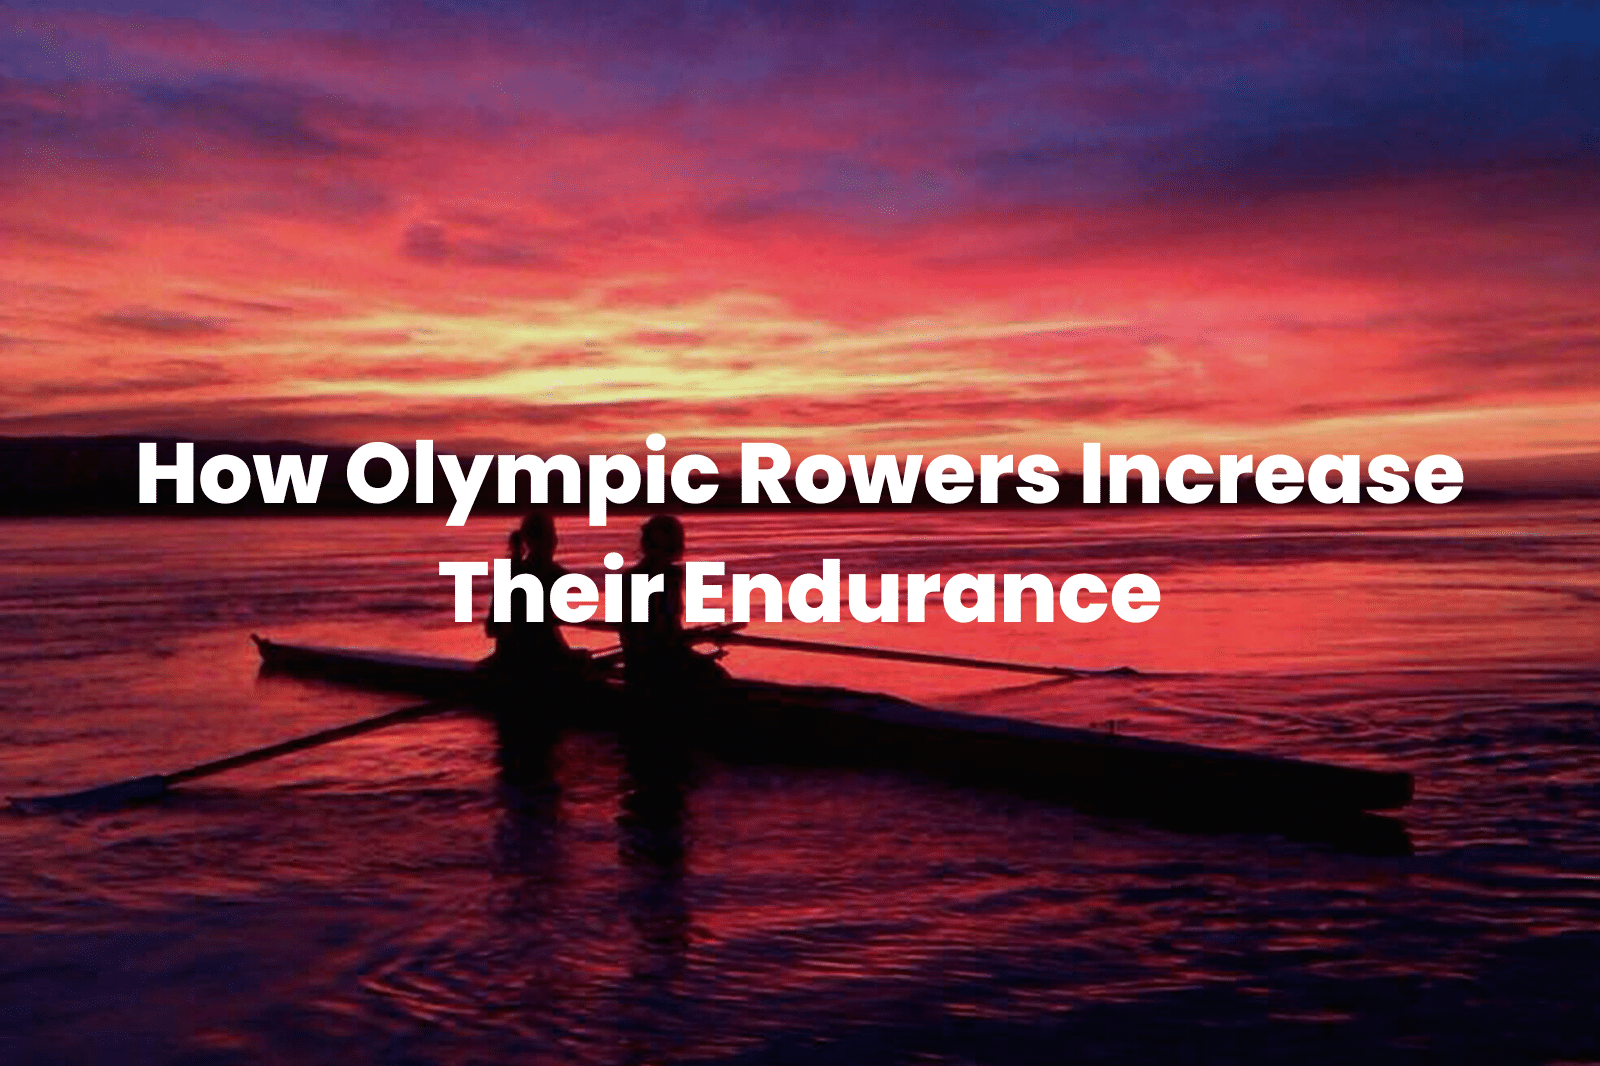 Rowers Increase Their Endurance